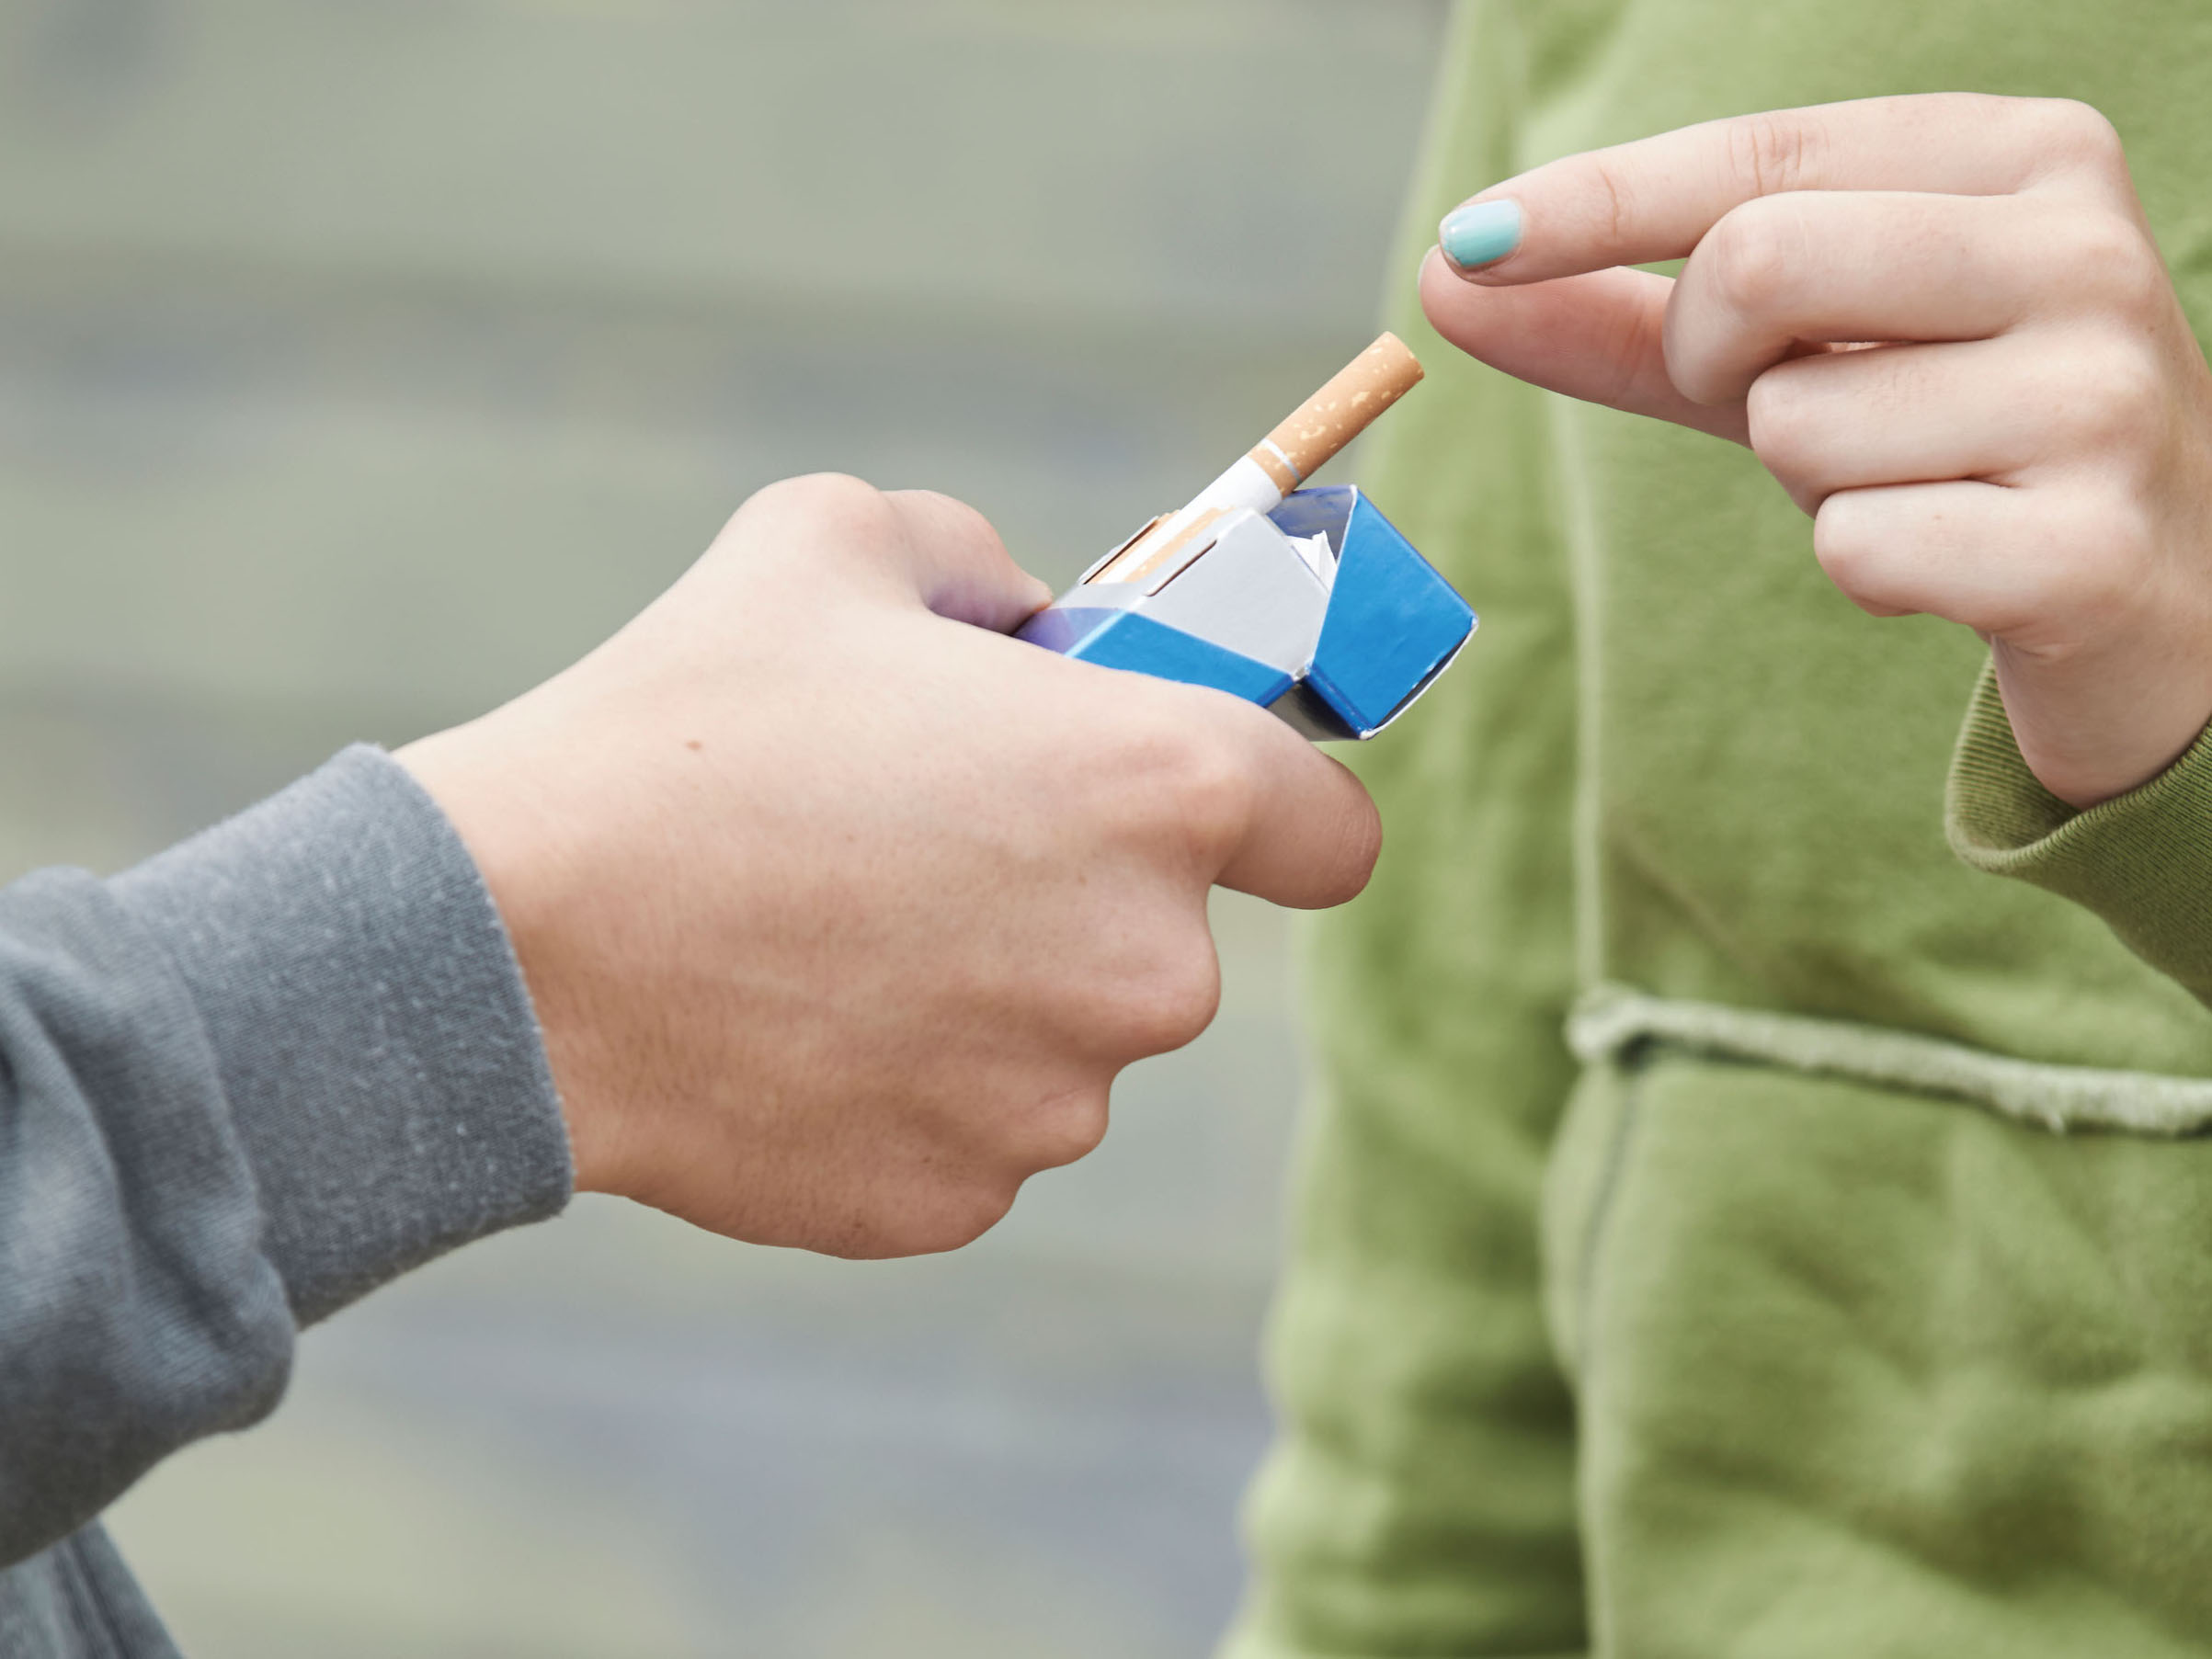 FDA Reprimands Tobacco Company for Not Meeting Premarketing Filing Requirements